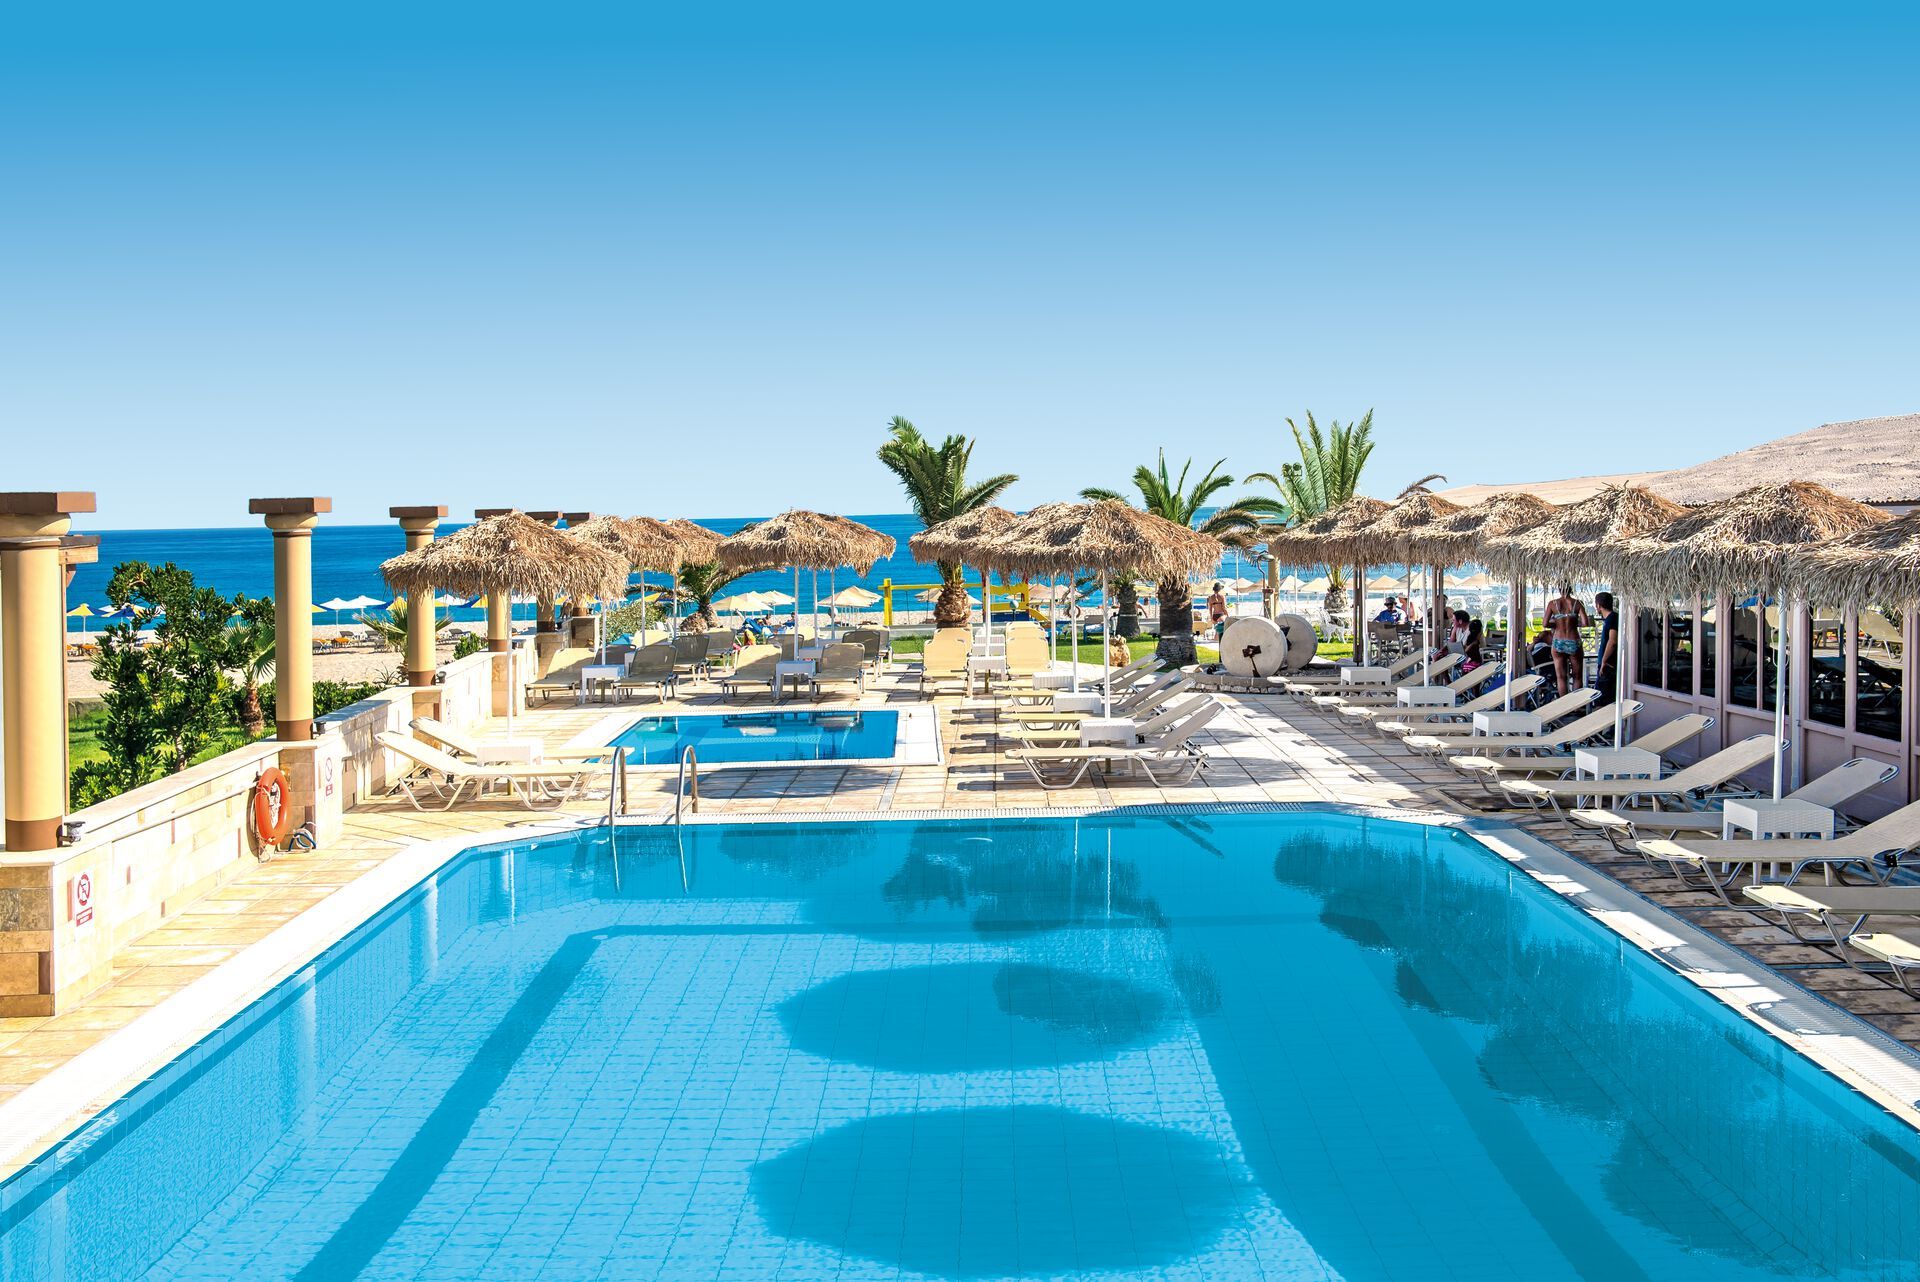 Crète - Rethymnon - Grèce - Iles grecques - Hôtel Odyssia Beach 4*